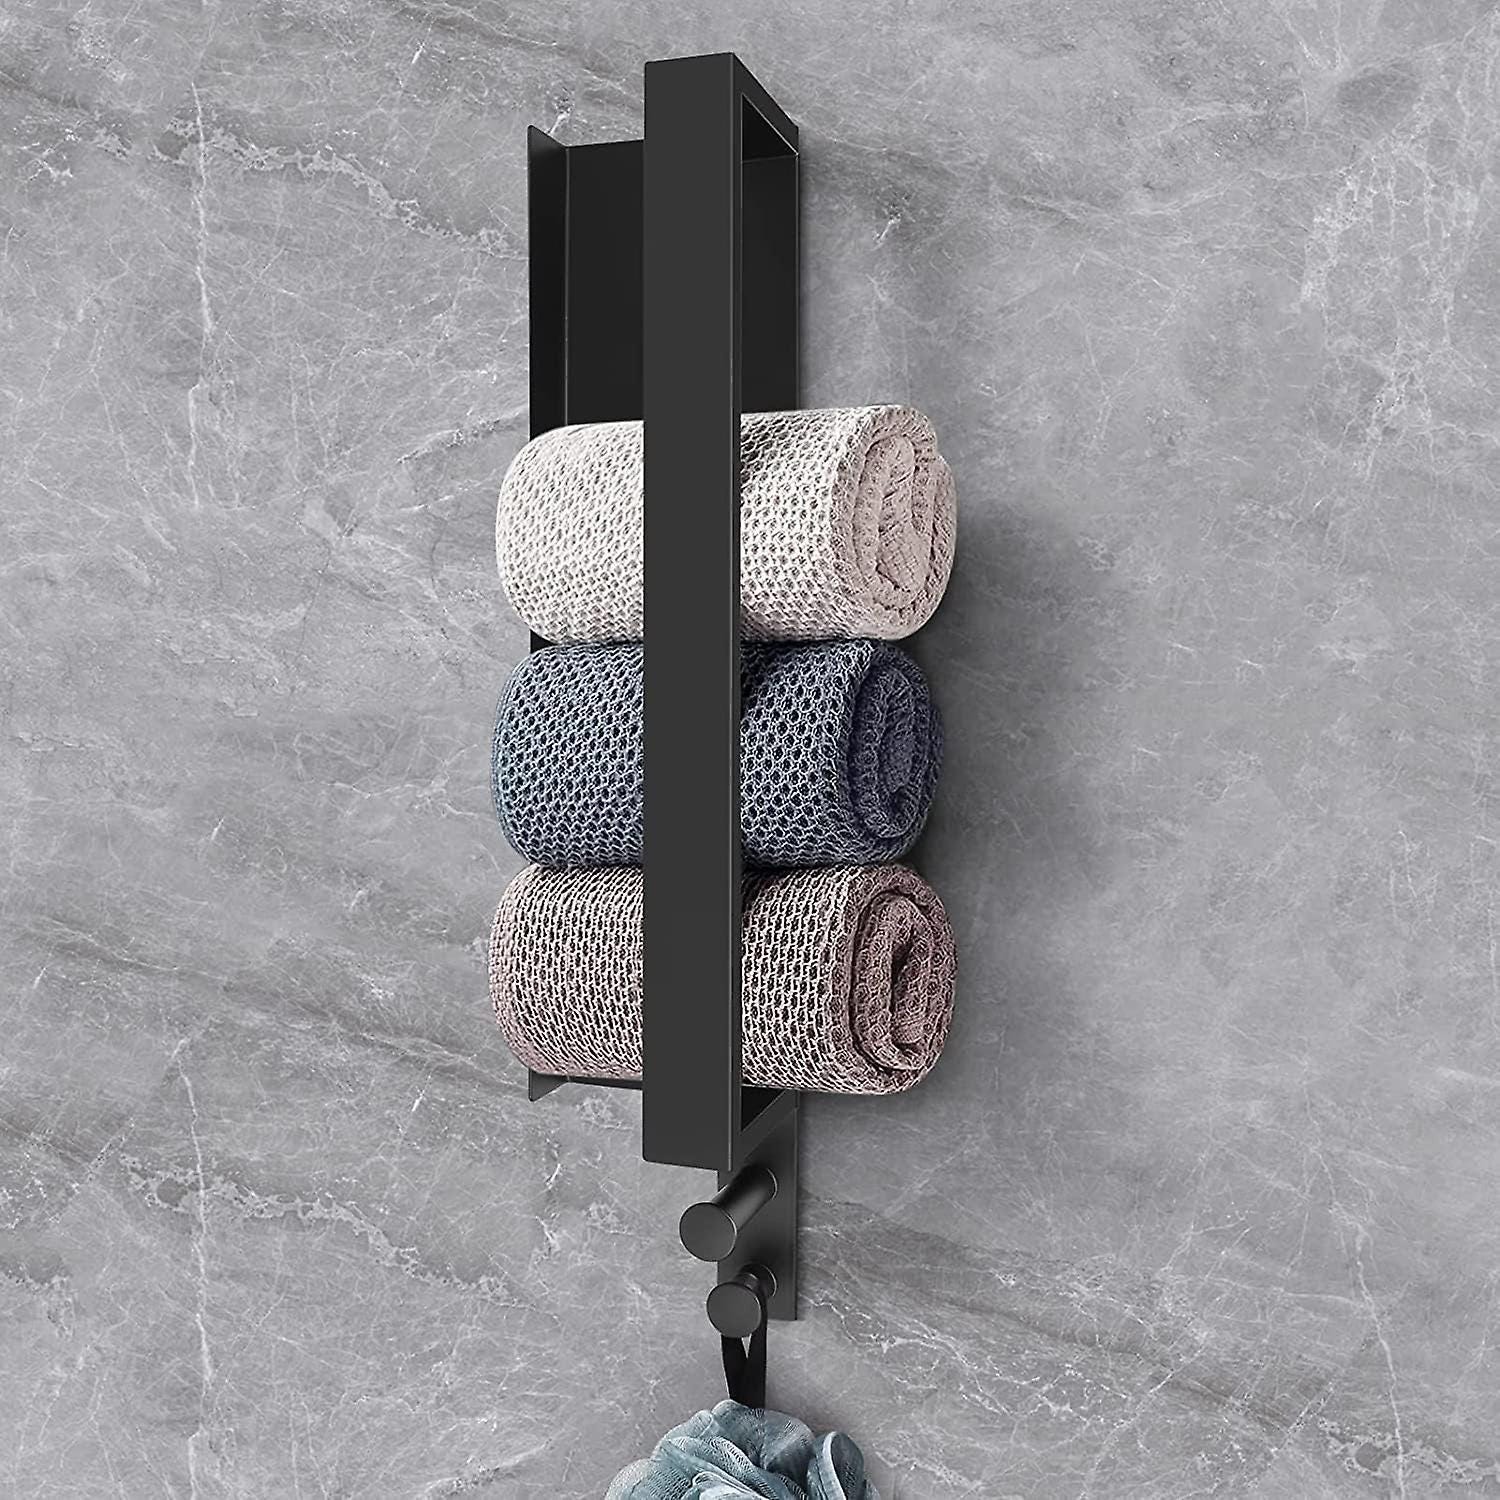 Porte-Serviette sans Perçage - Autocollante Crochet Adhésif